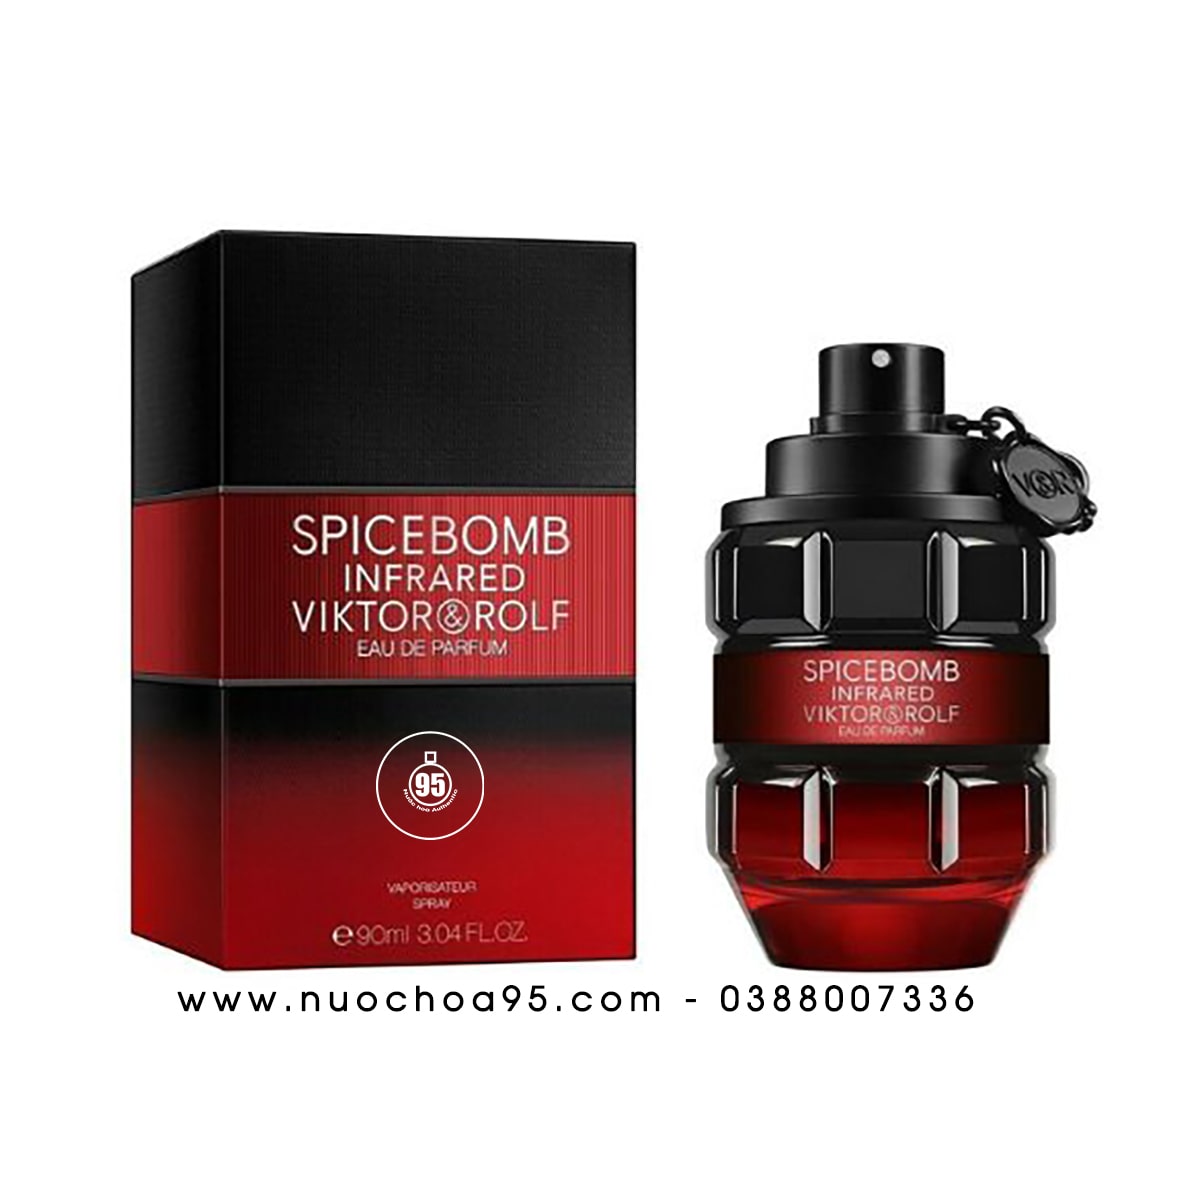 Nước hoa Viktor & Rolf Spicebomb Infrared Eau de Parfum